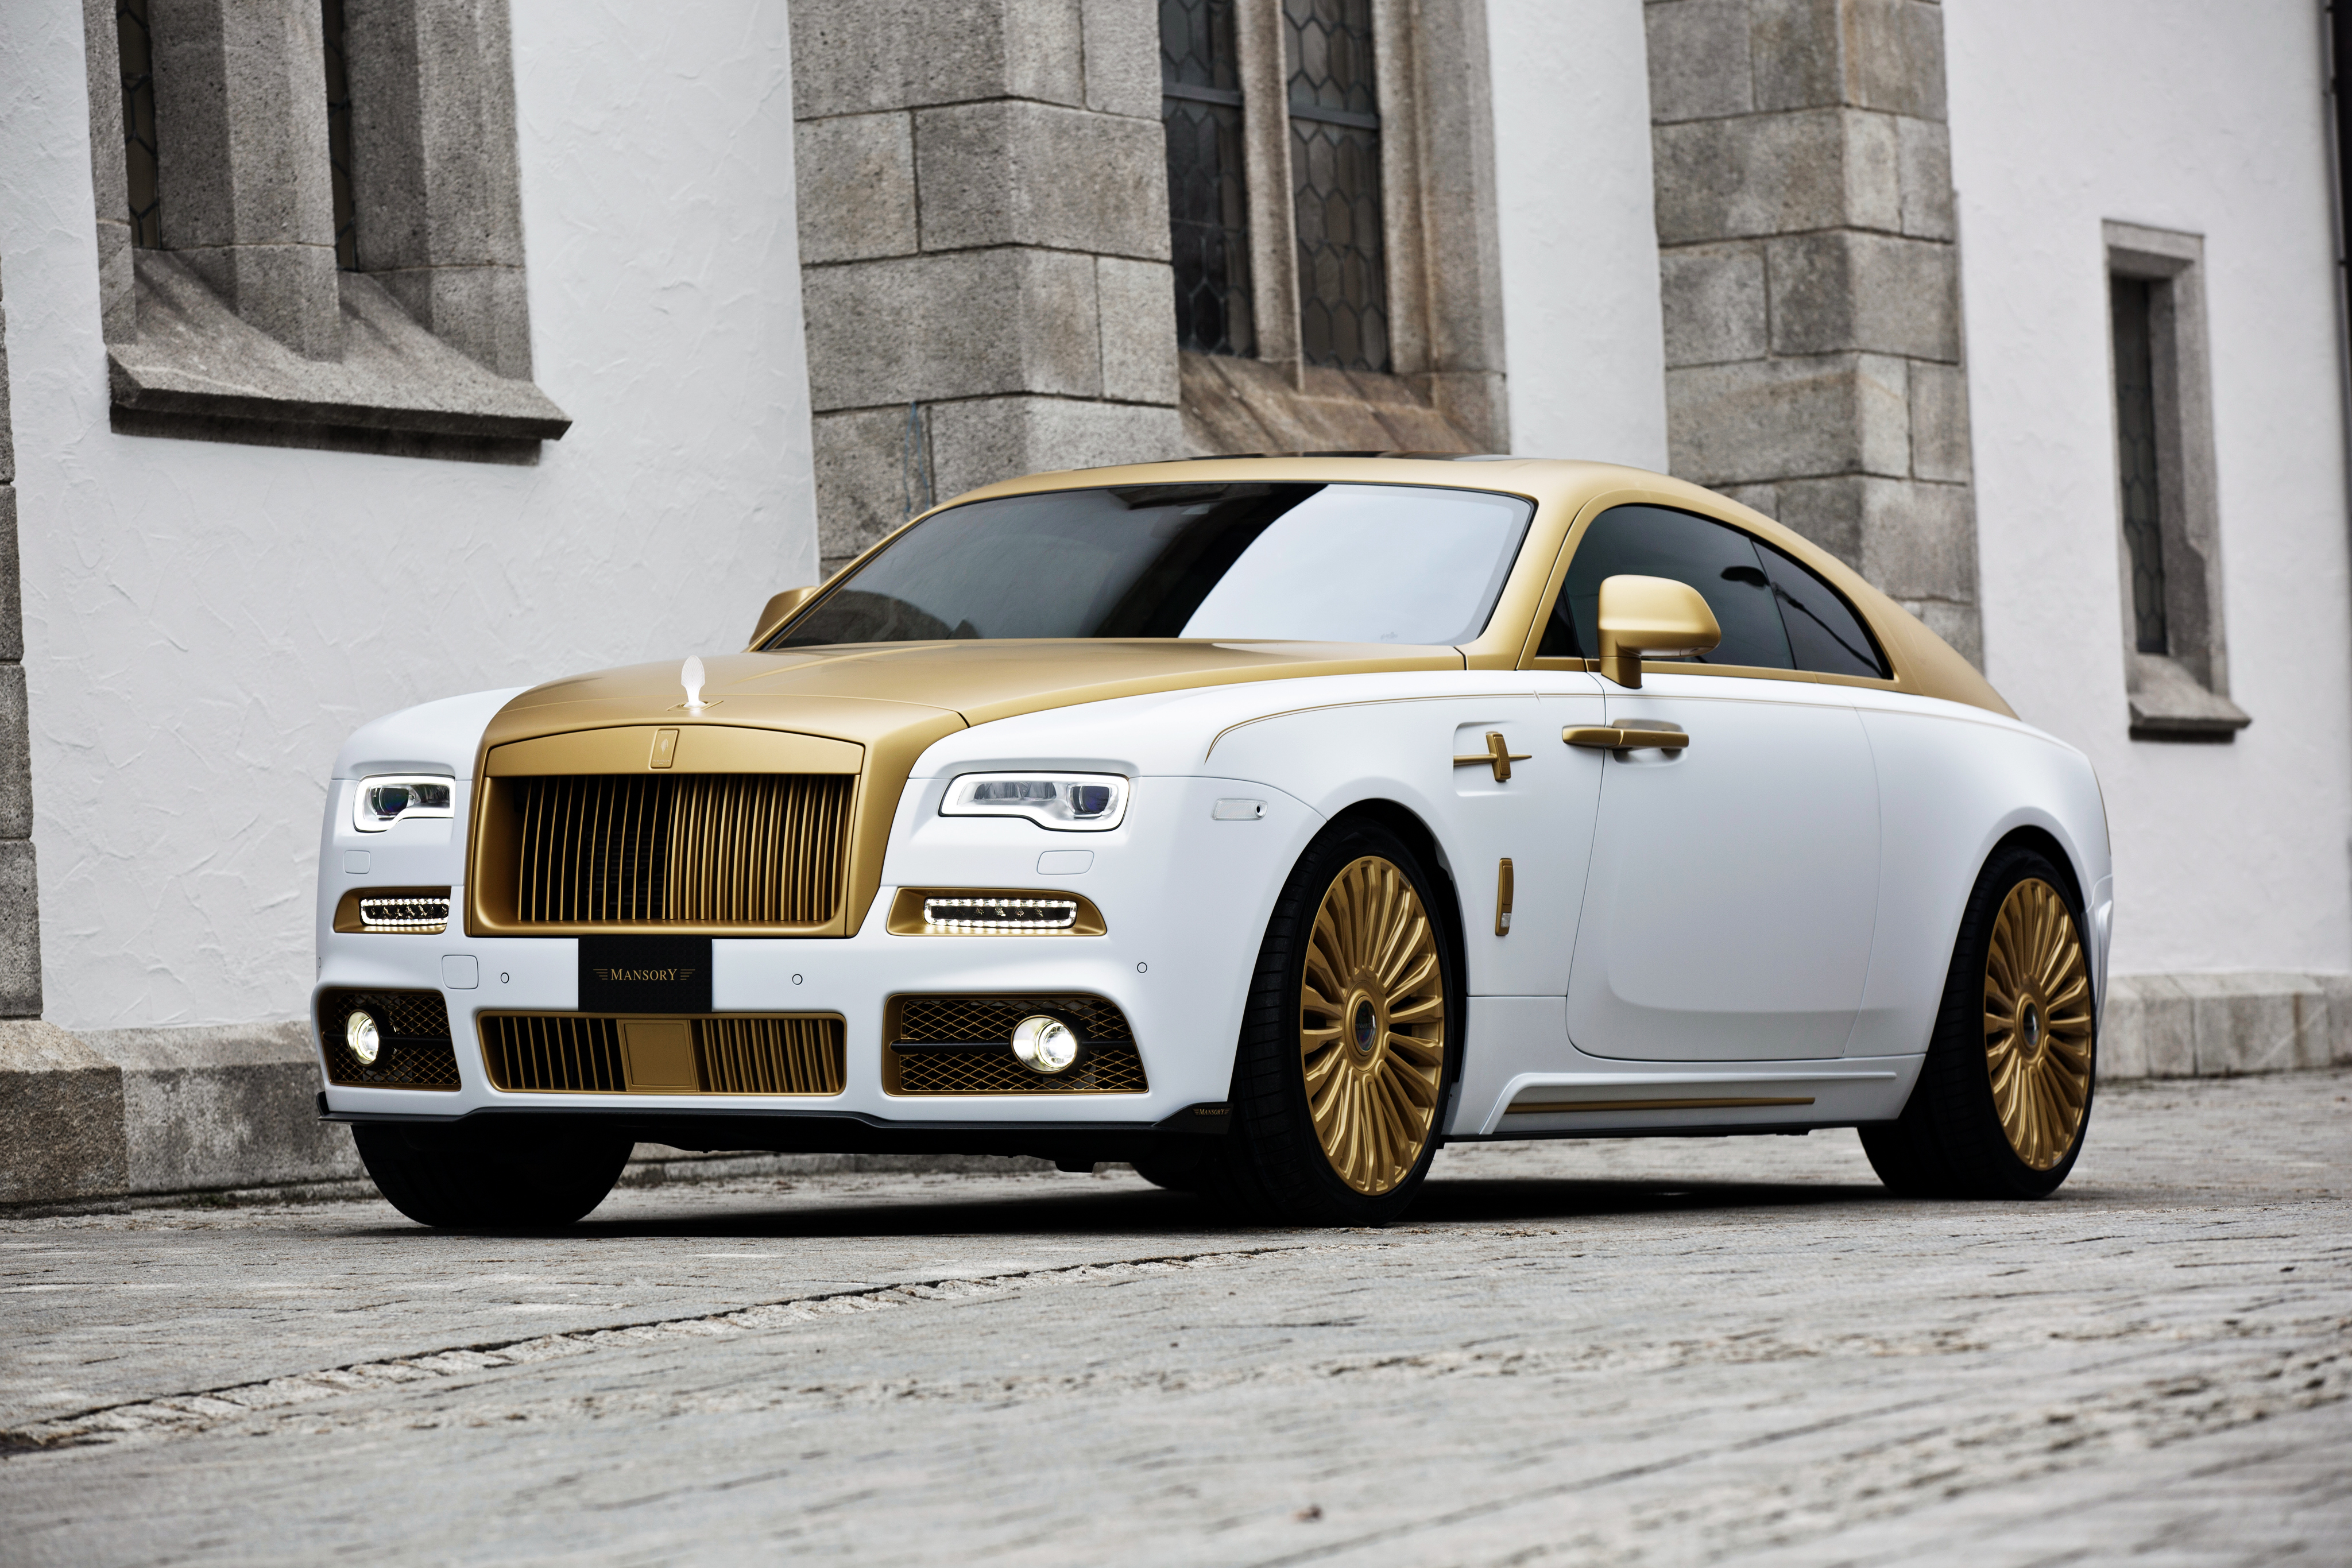 Rolls royce mansory. Rolls Royce Wraith Mansory Palm Edition 999. Mansory Rolls Royce Wraith золотой. Роллс Ройс врайт мансори 2020. Rolls Royce Wraith 2022.